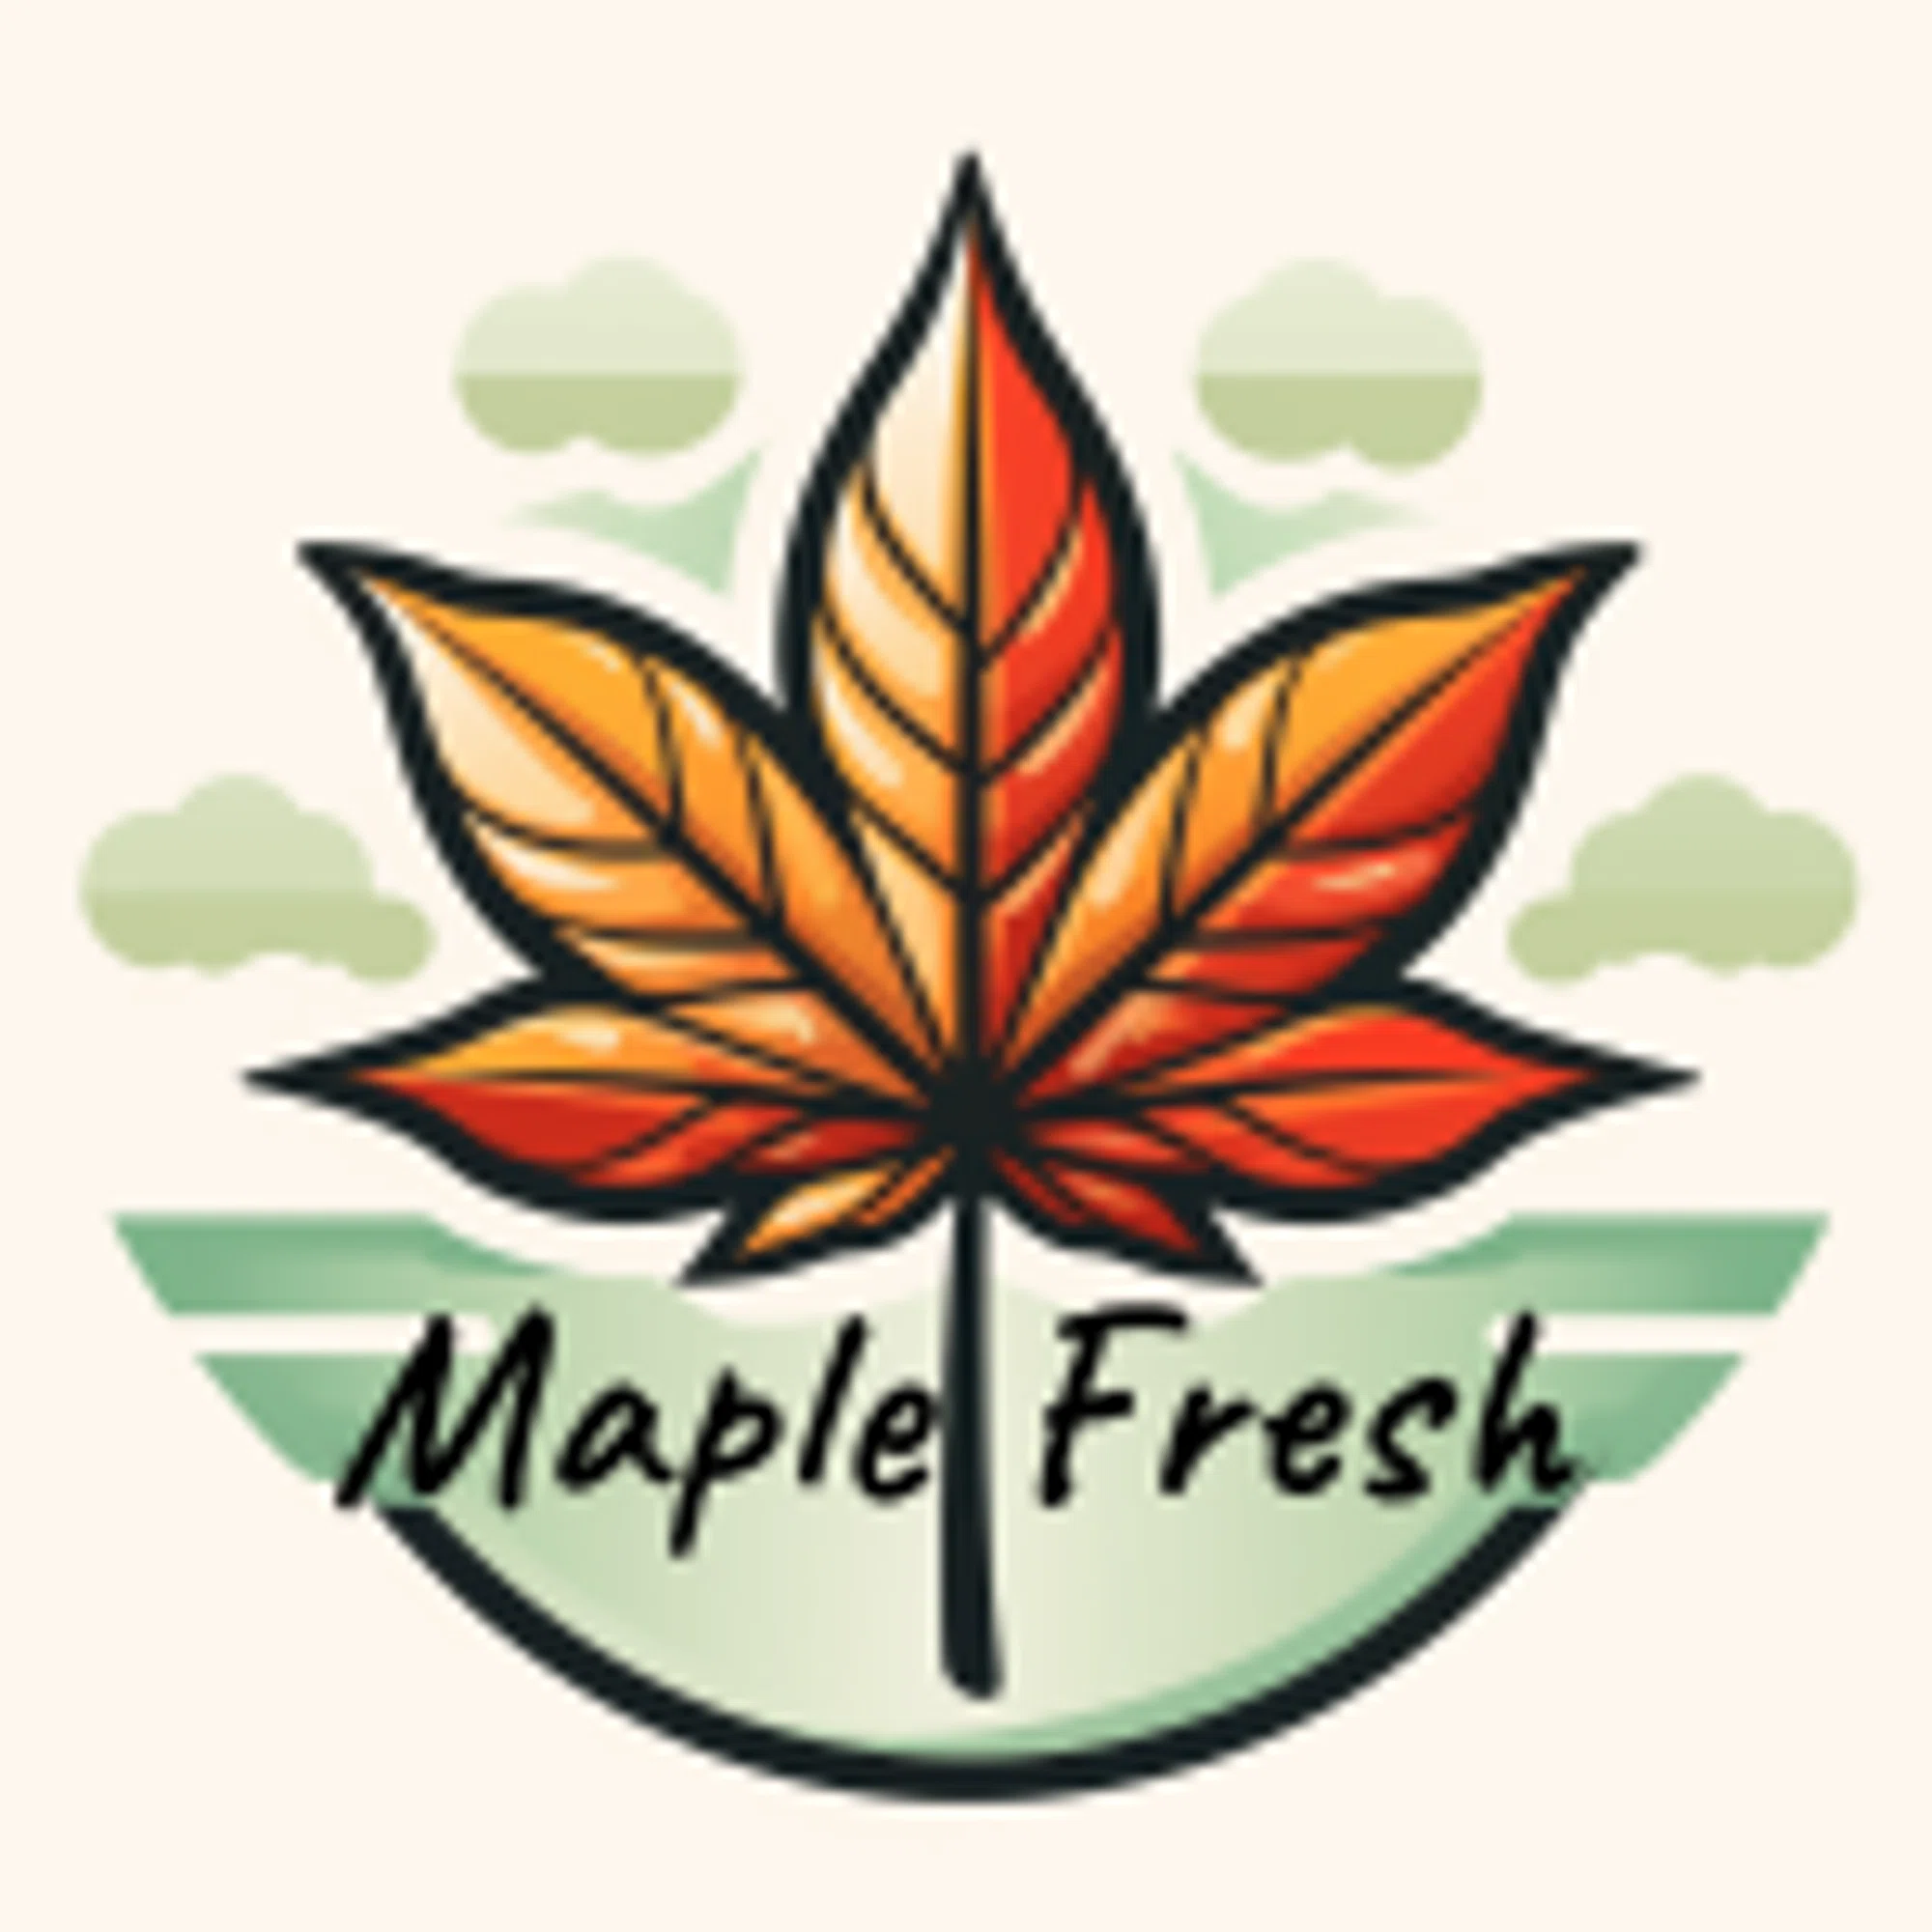 Maplefresh